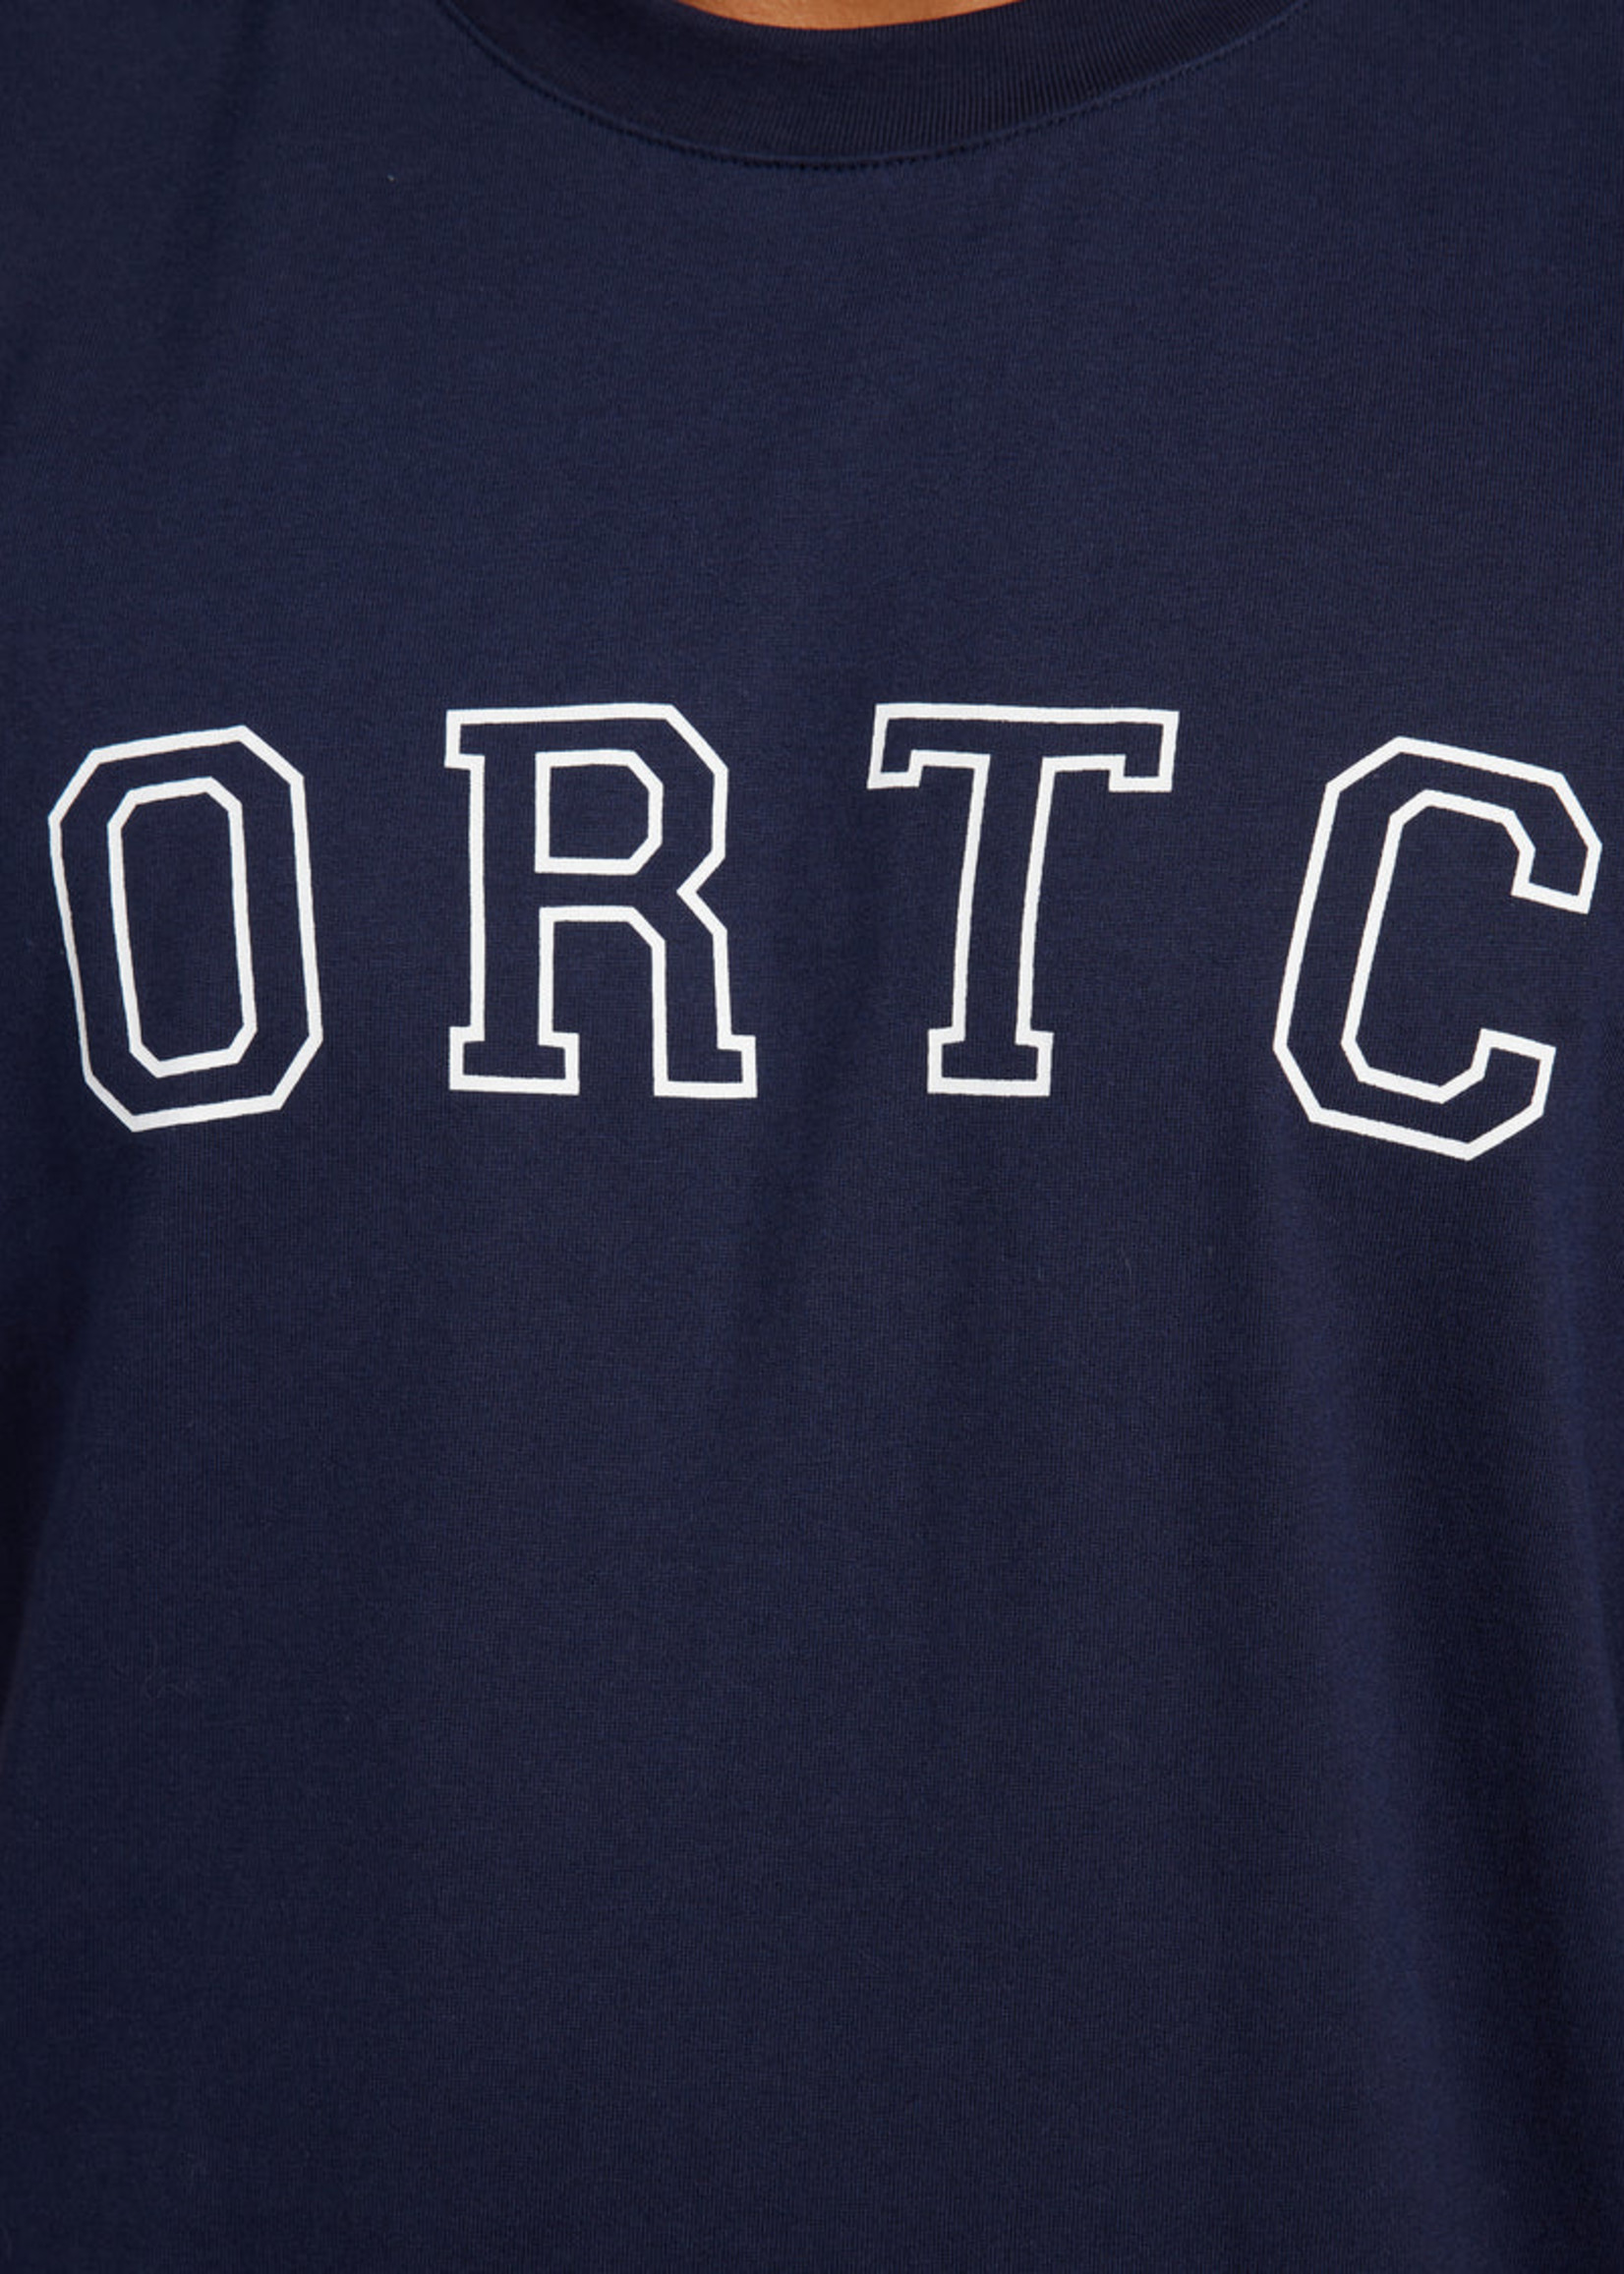 ORTC College T Shirt White Logo